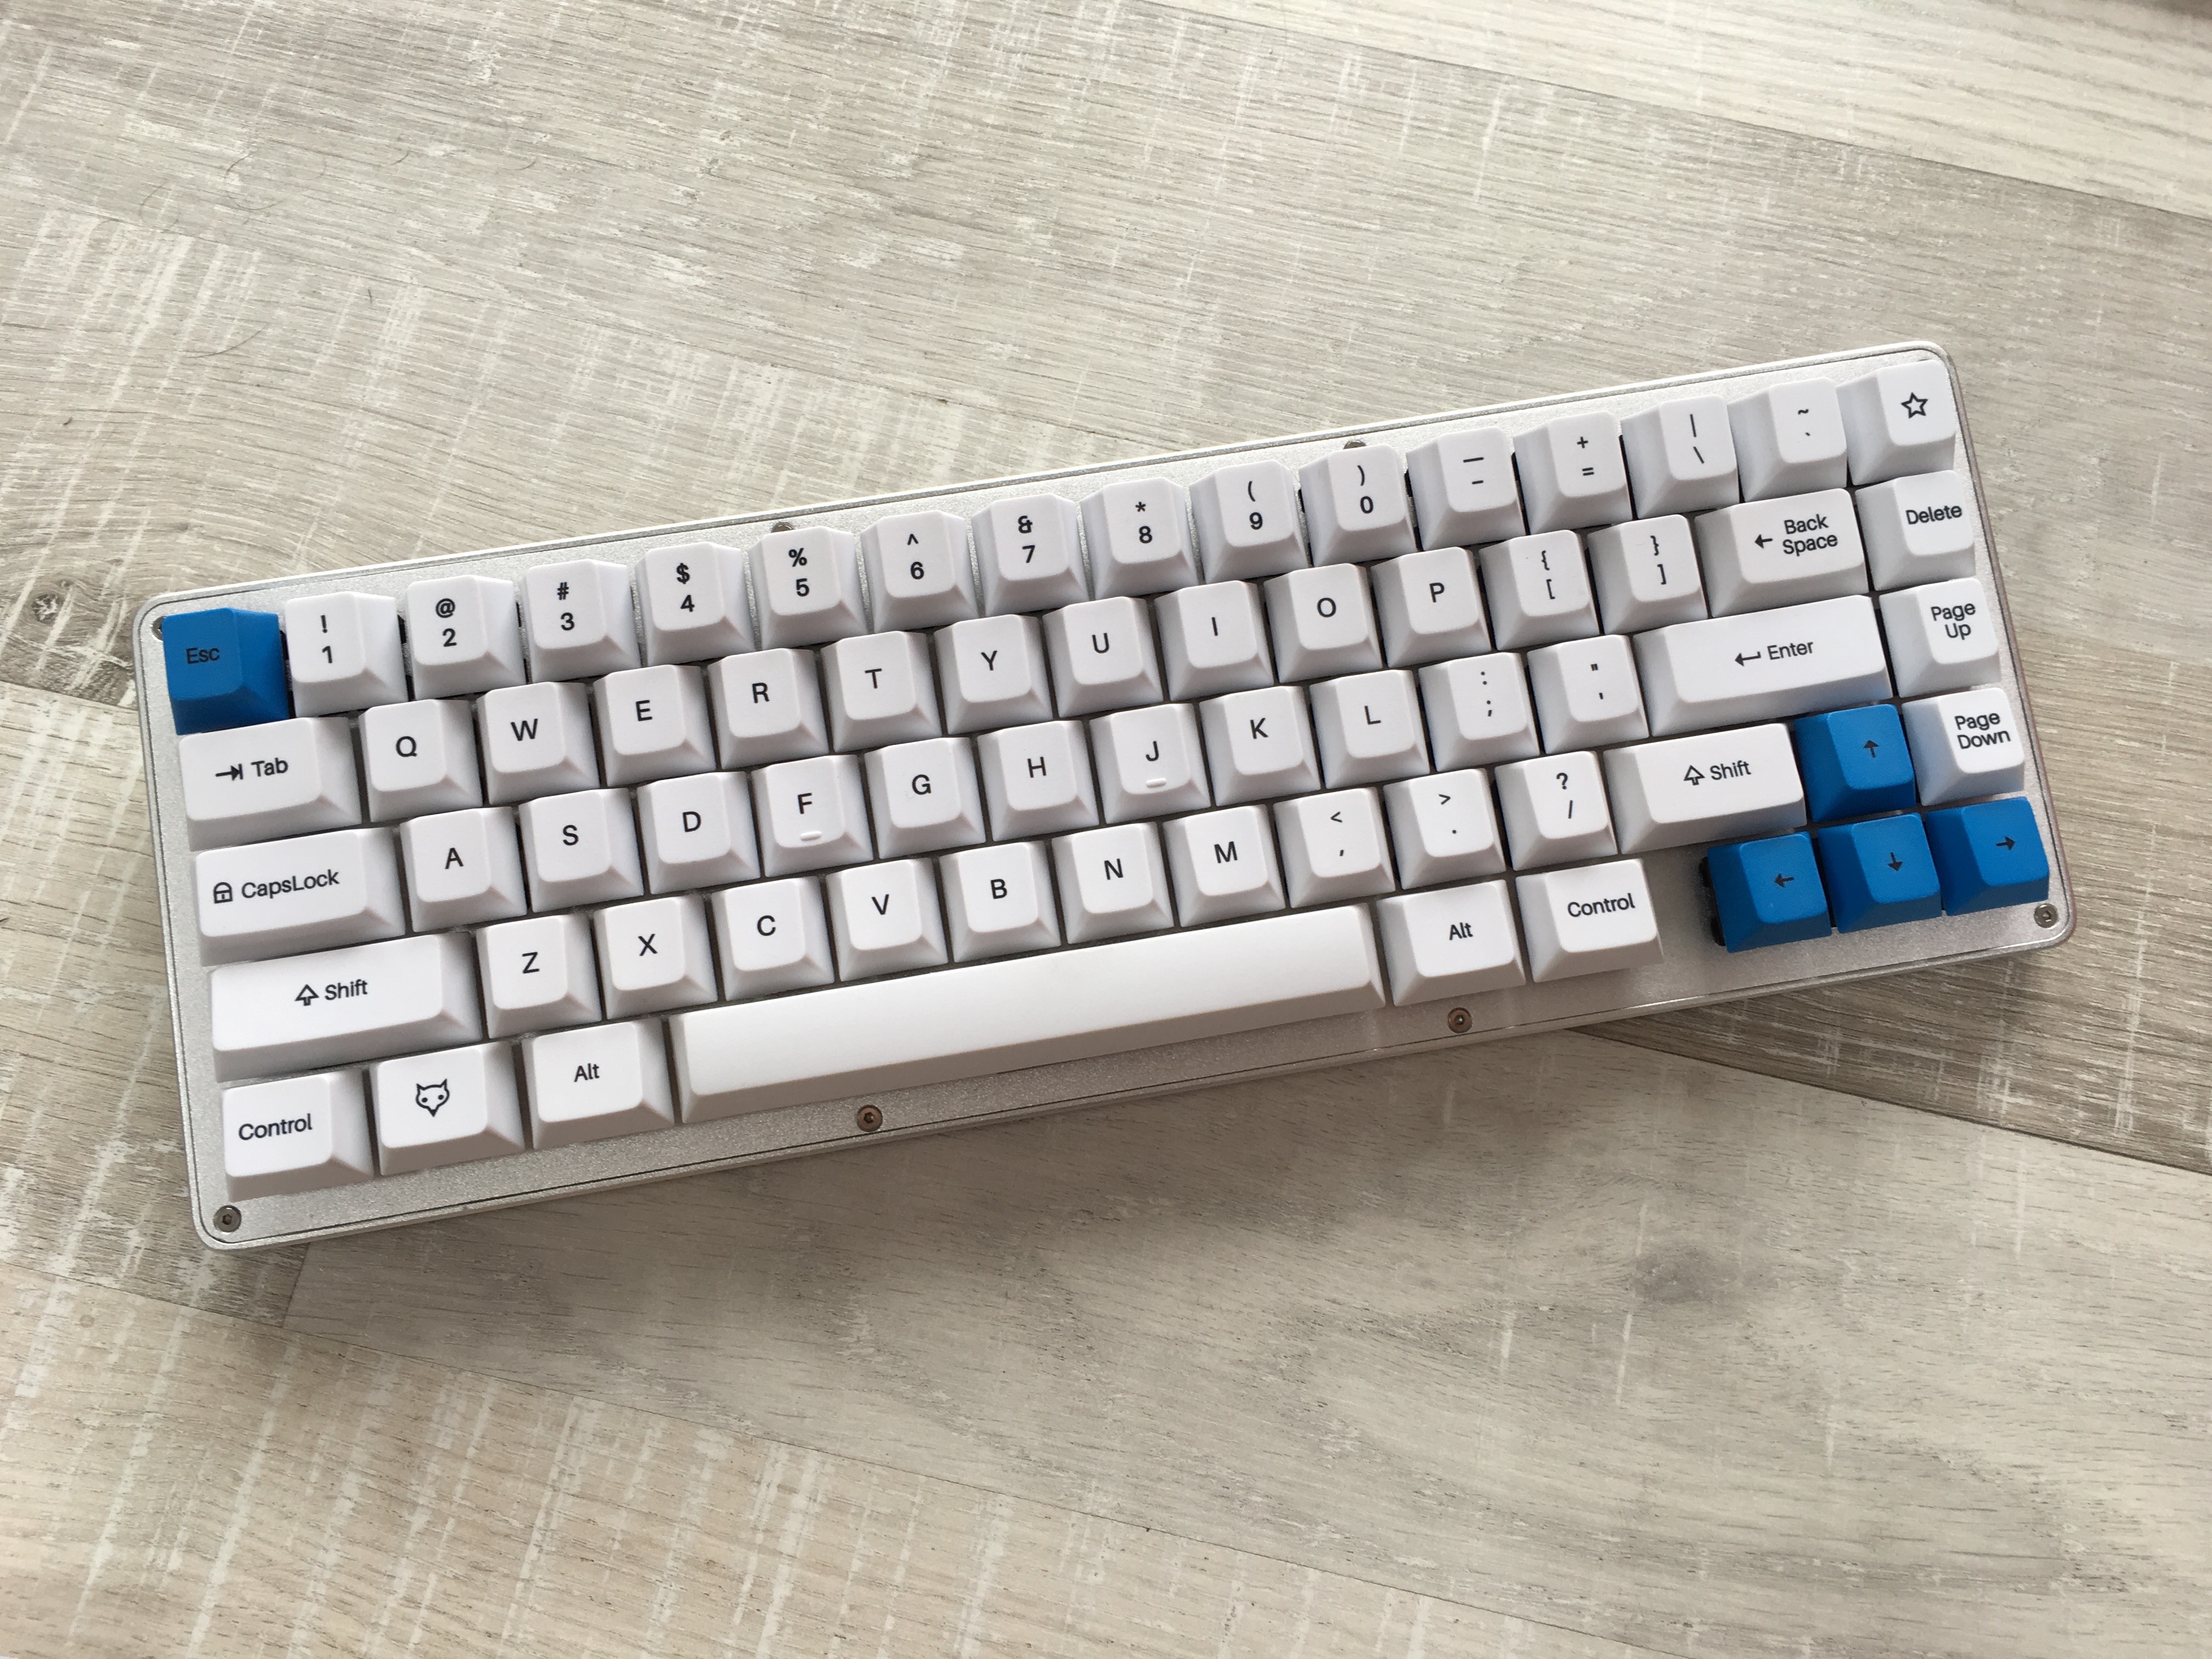 The Whitefox keyboard